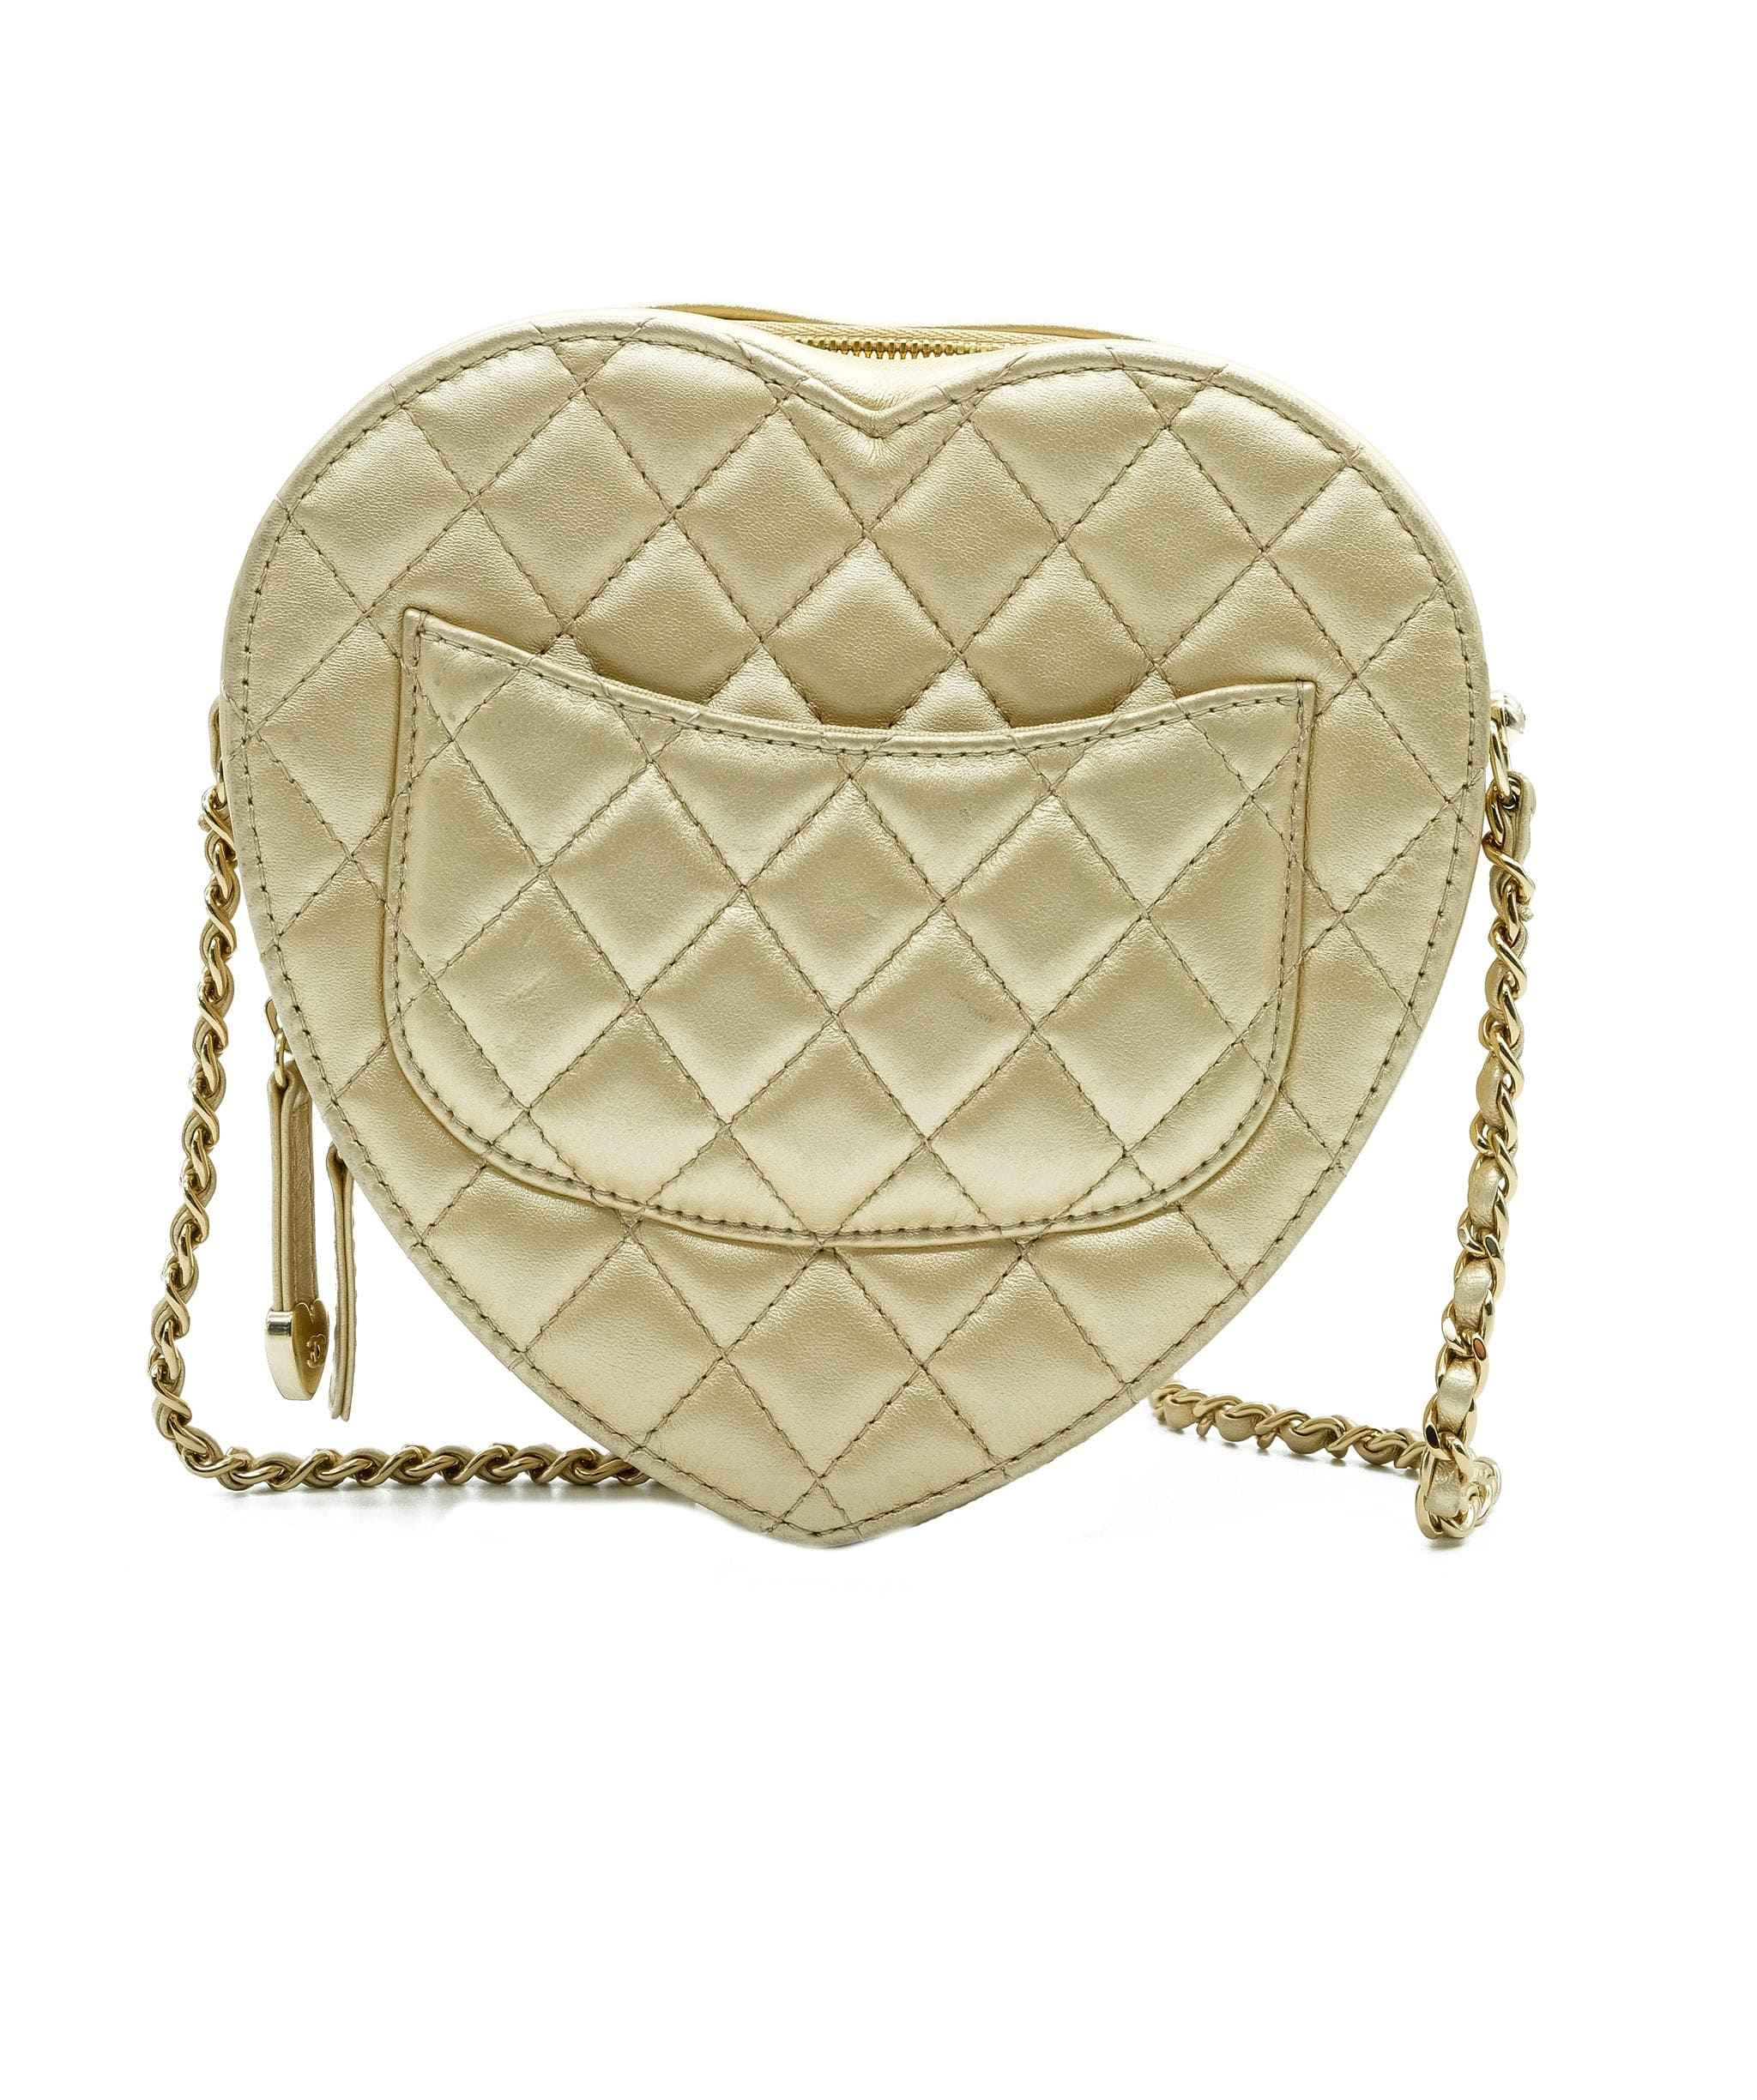 Chanel Chanel Heart Bag Gold RJC1362